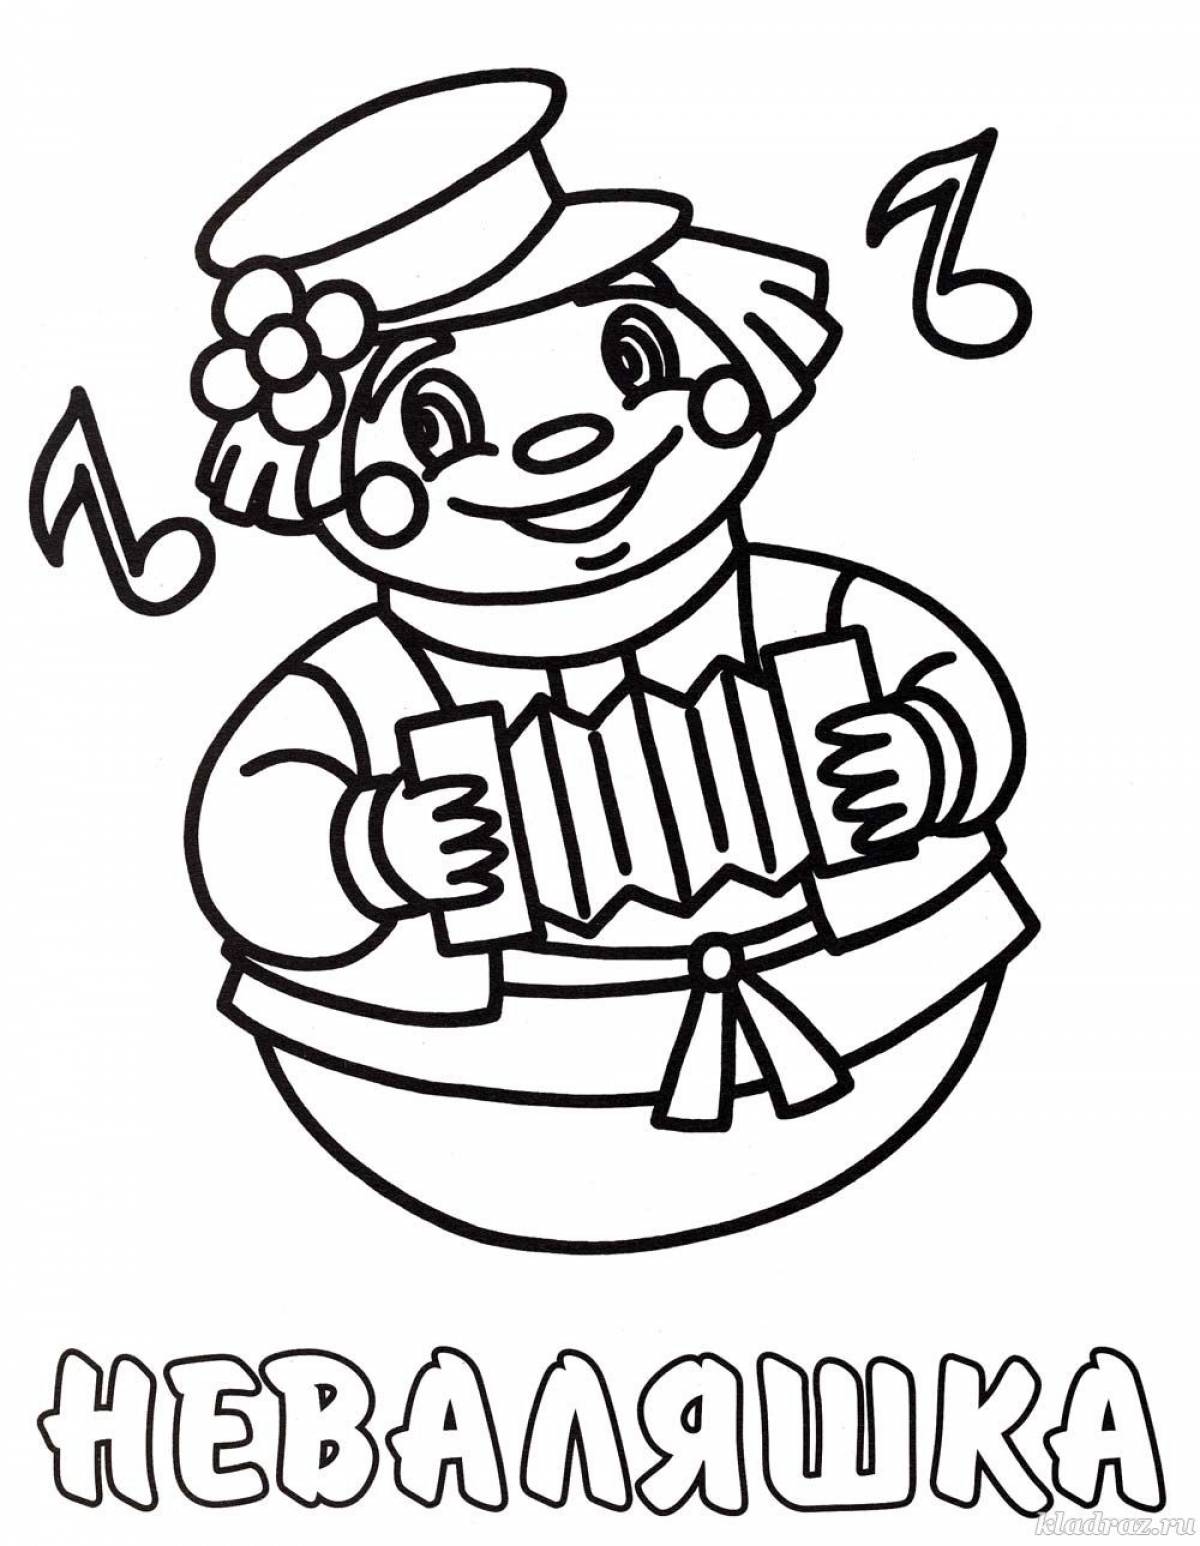 Tumbler with an accordion